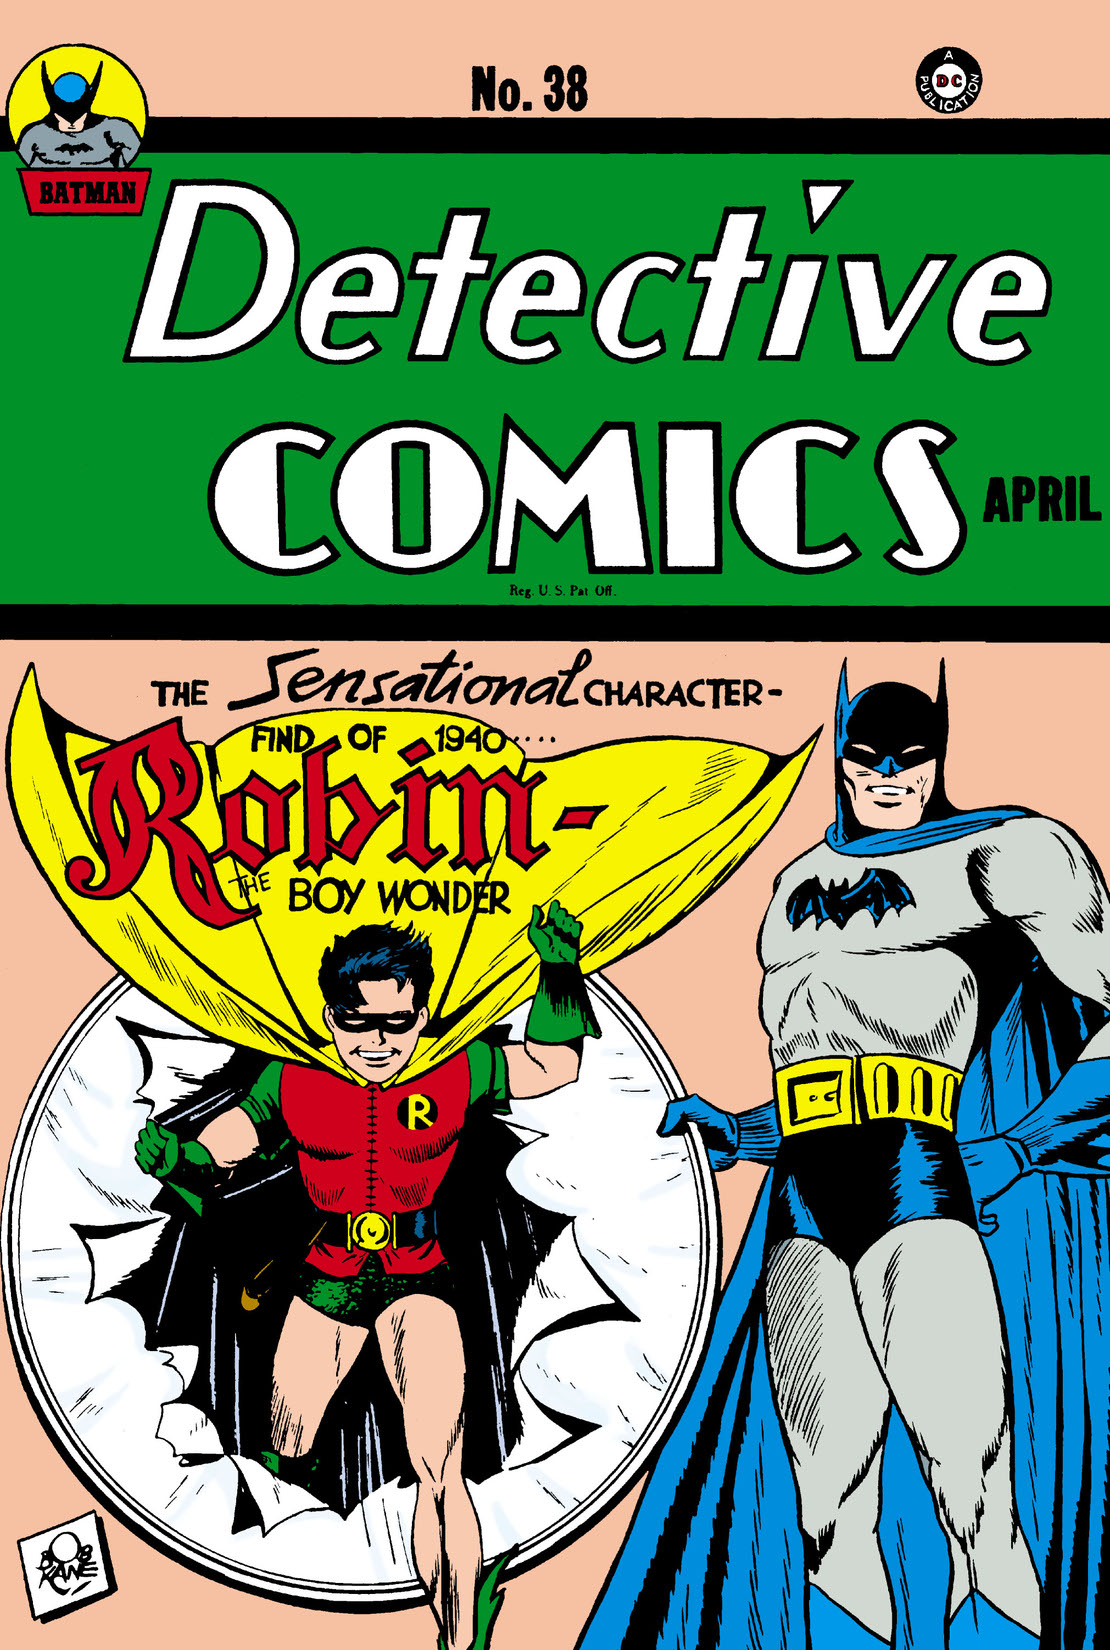 Detective Comics (1937-) #38 preview images